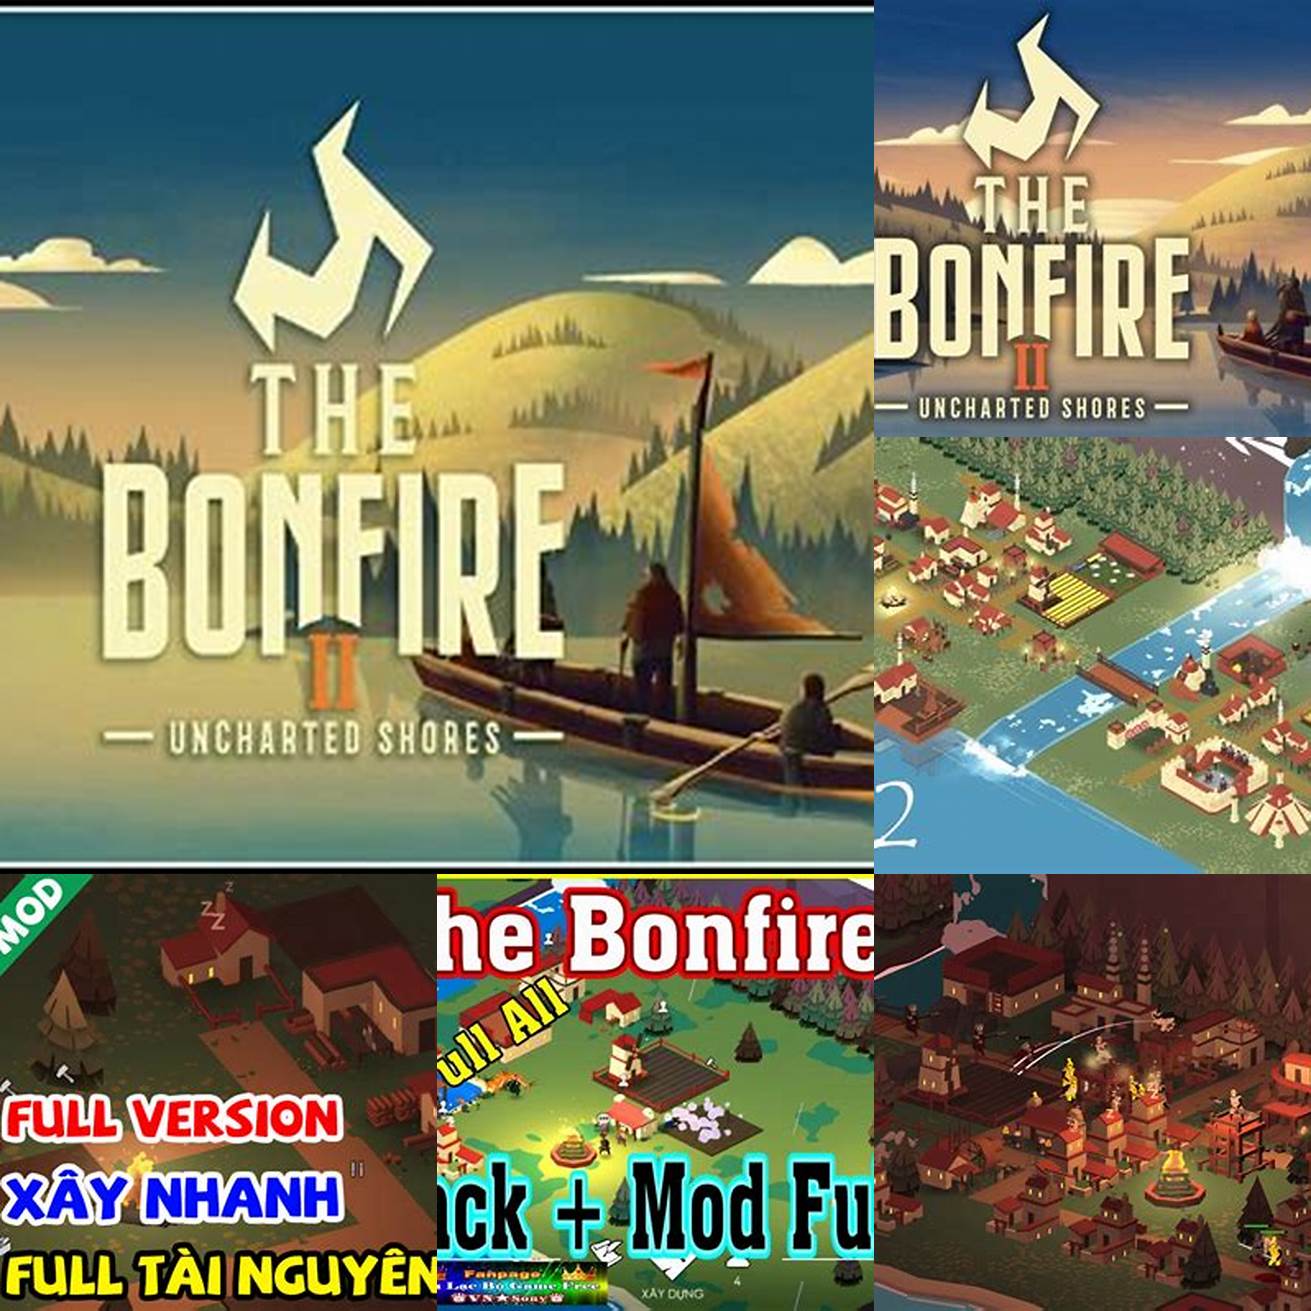 Cari mod apk The Bonfire 2 di situs download game mod apk terpercaya